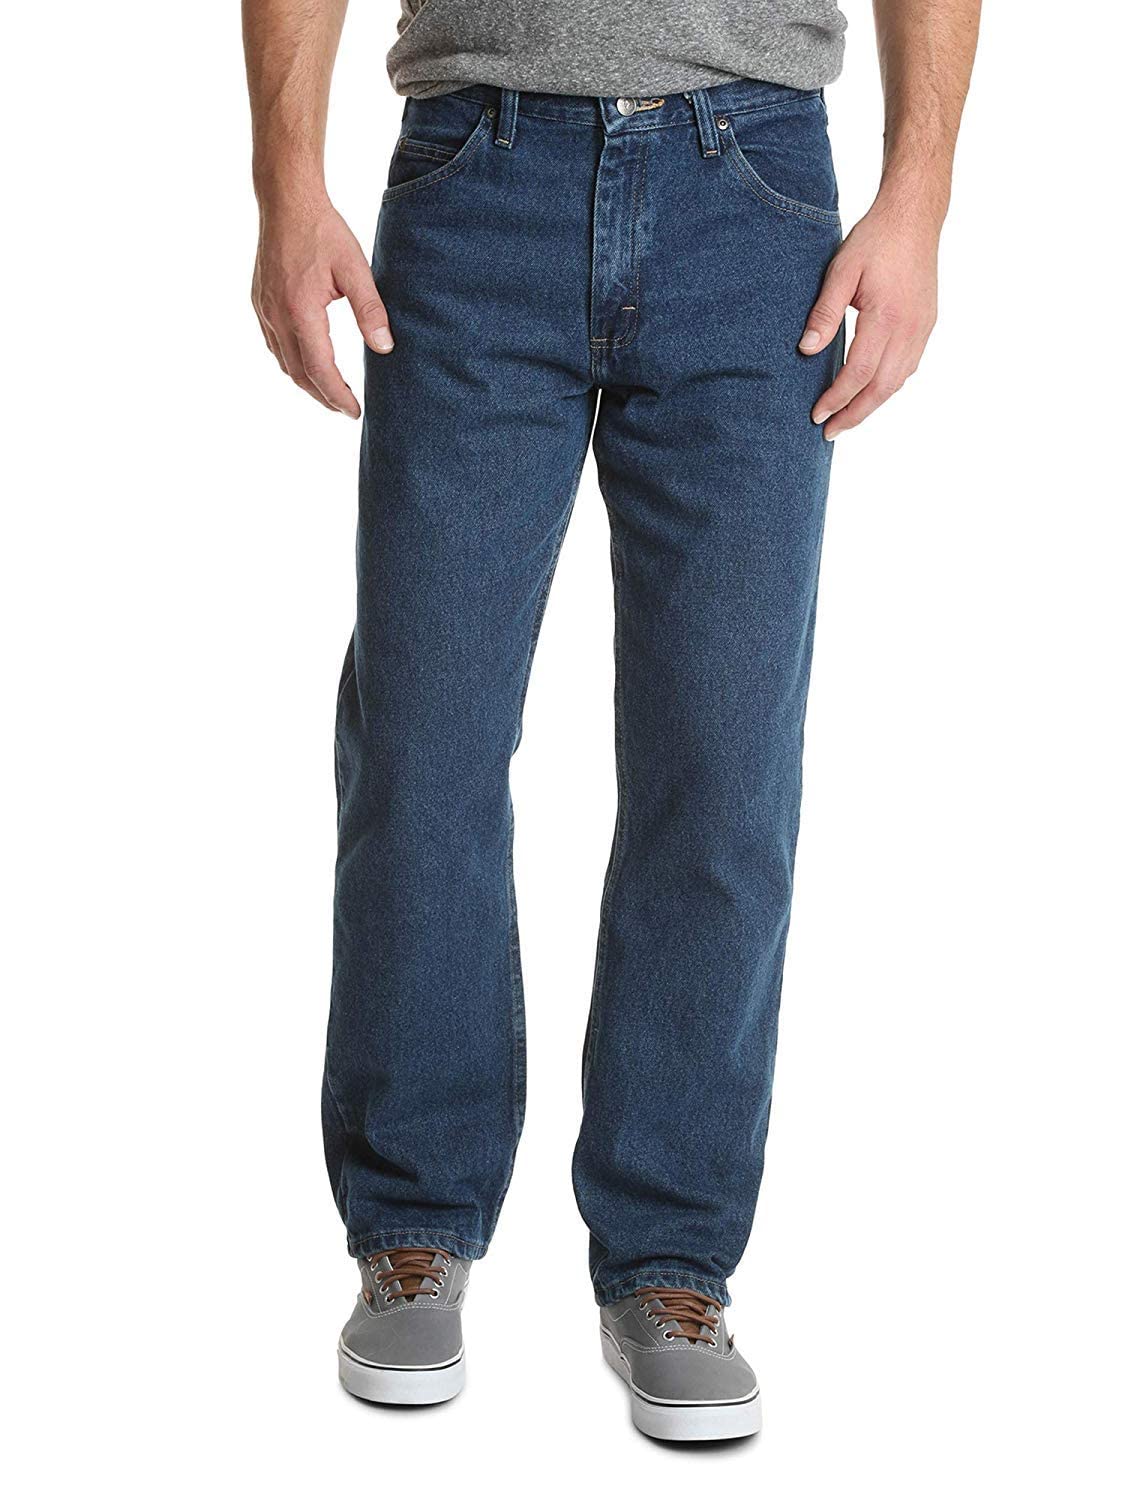 Wrangler Authentics Men's Classic 5-Pocket Relaxed Fit Cotton Jean, Dark Stonewash, 42W x 36L